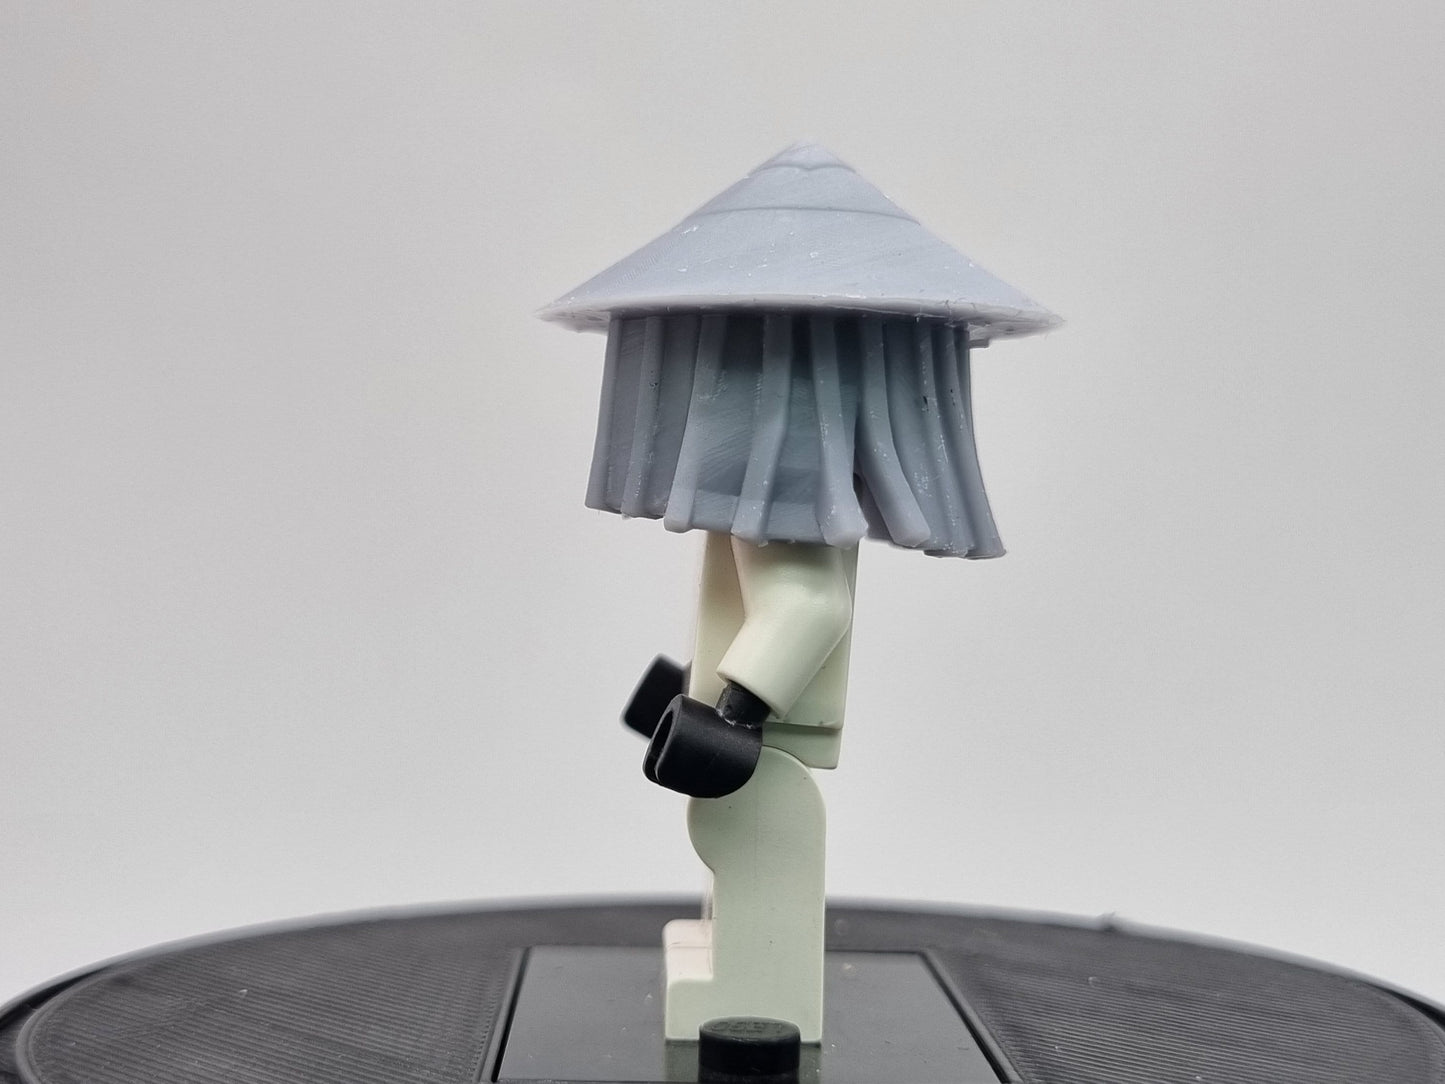 Building toy custom 3D printed ninja hats